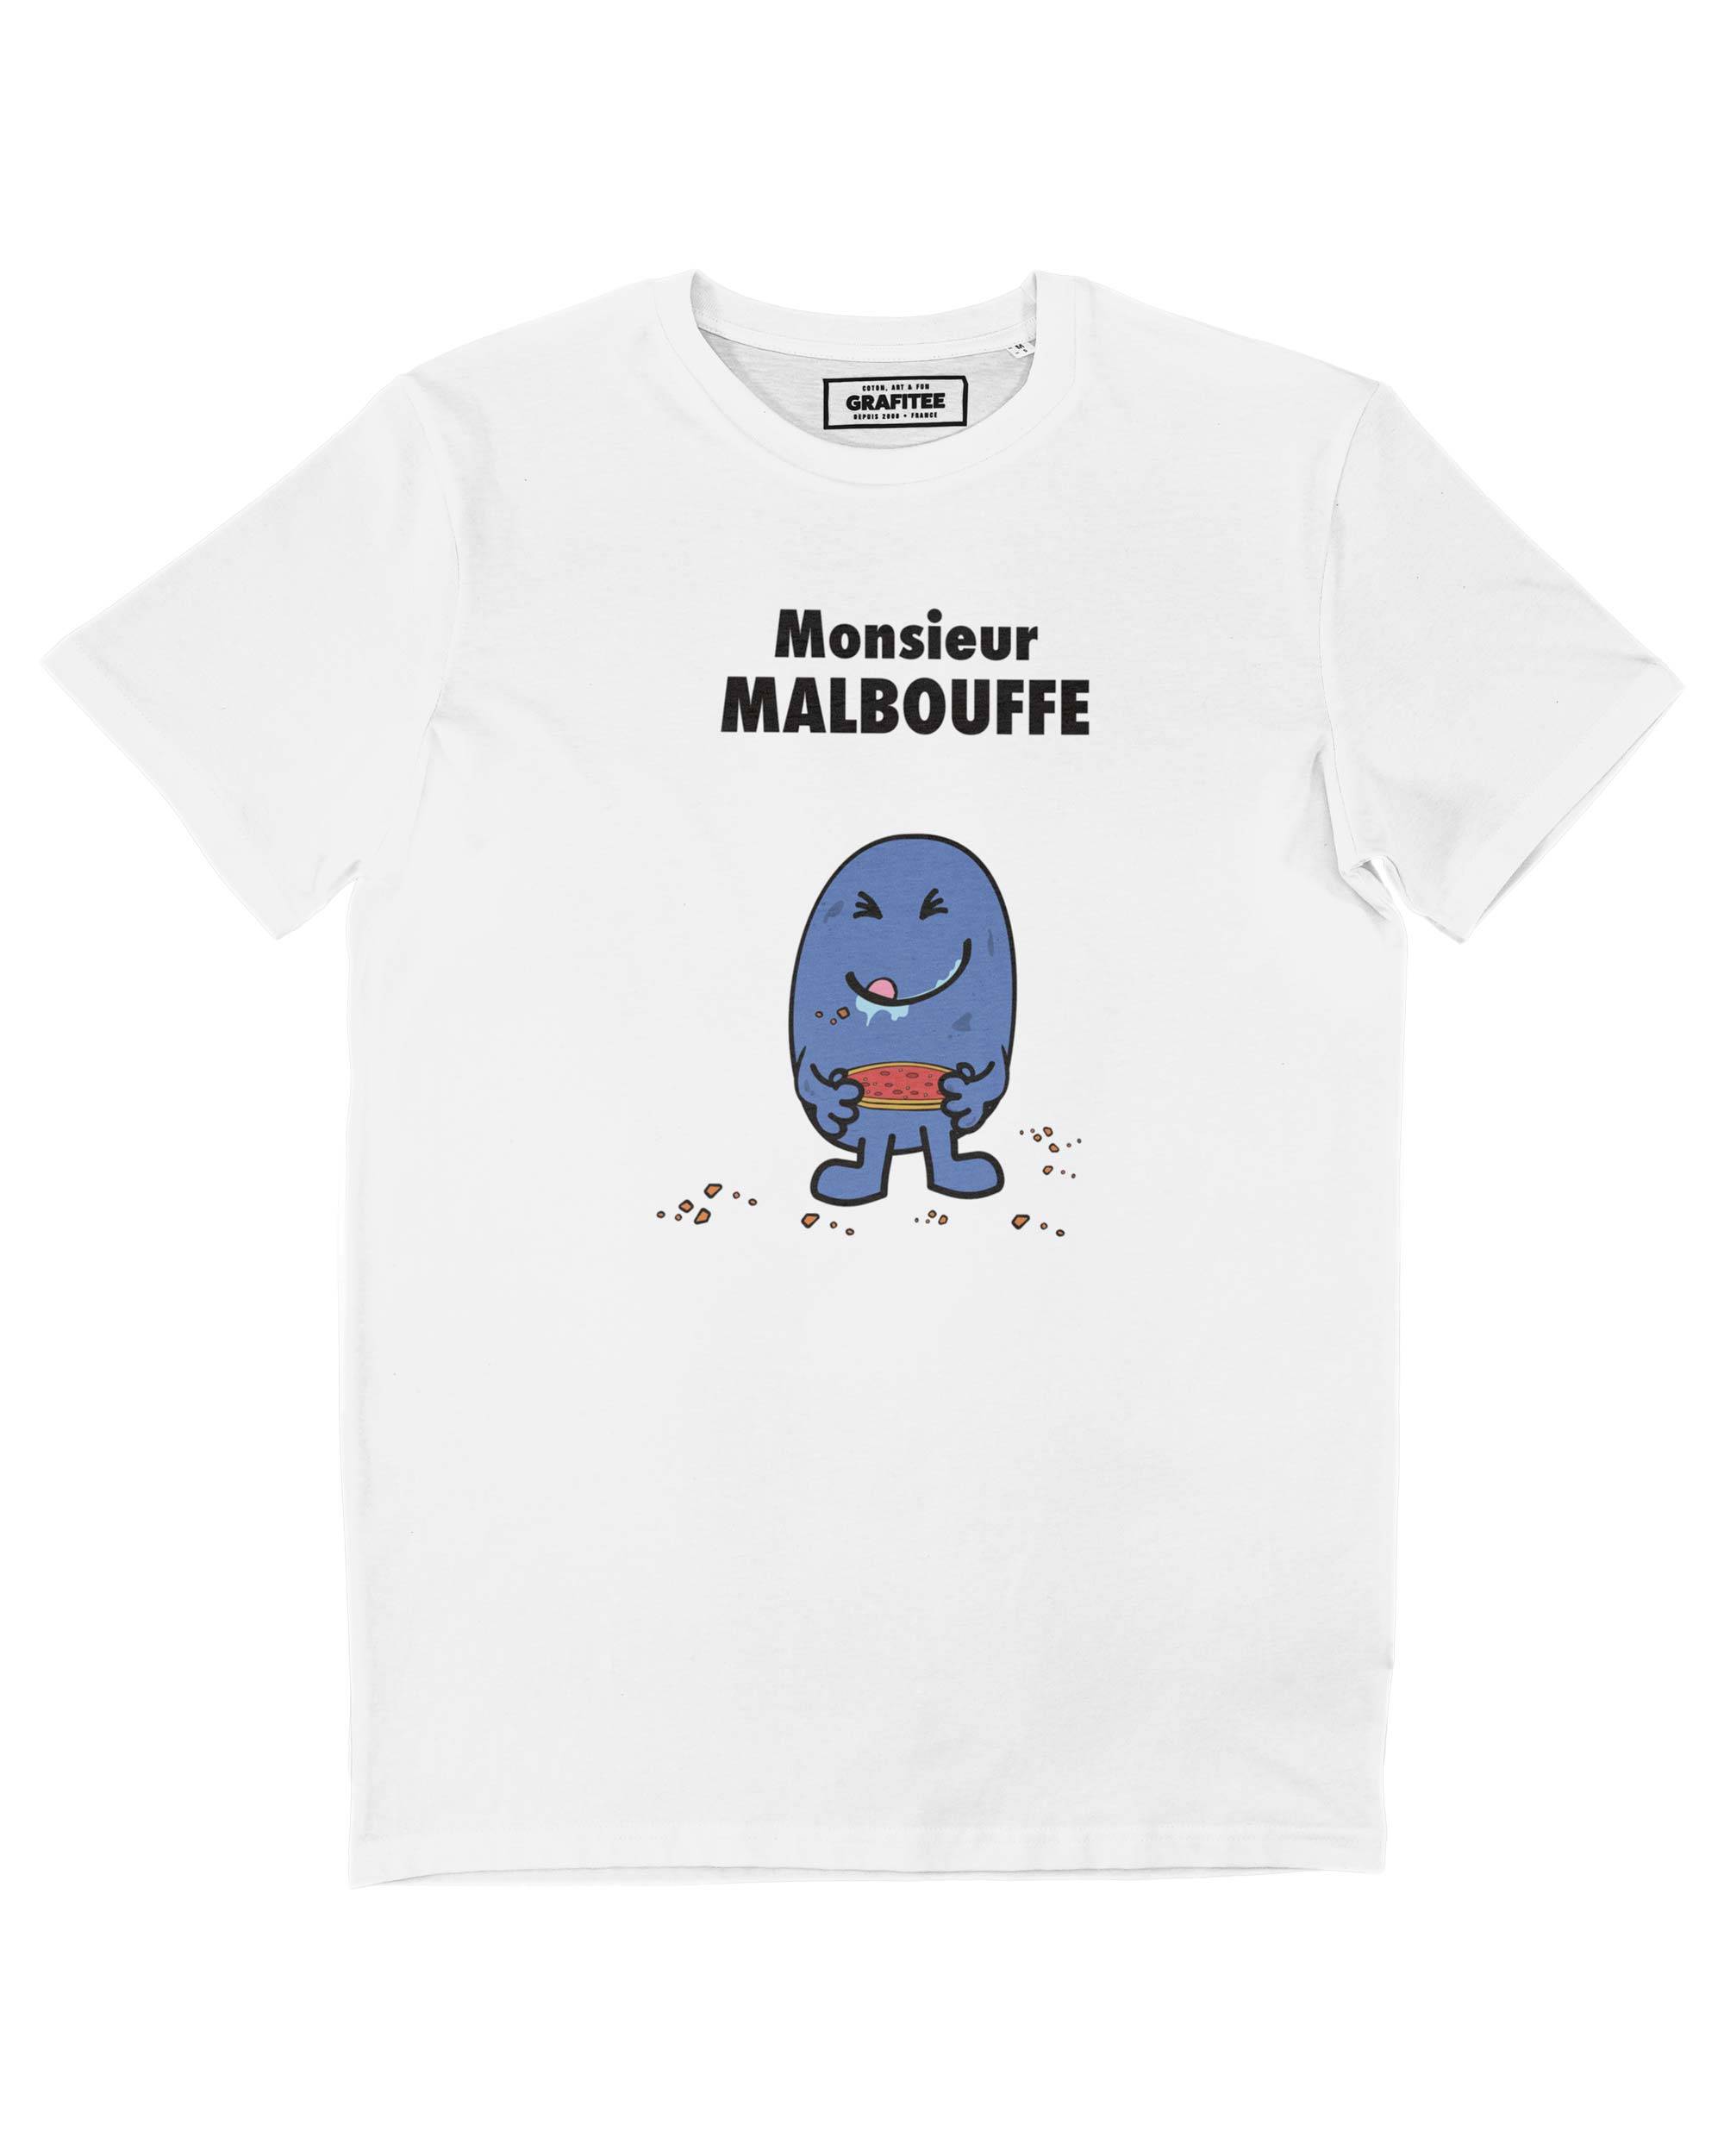 T-shirt Monsieur Malbouffe Grafitee